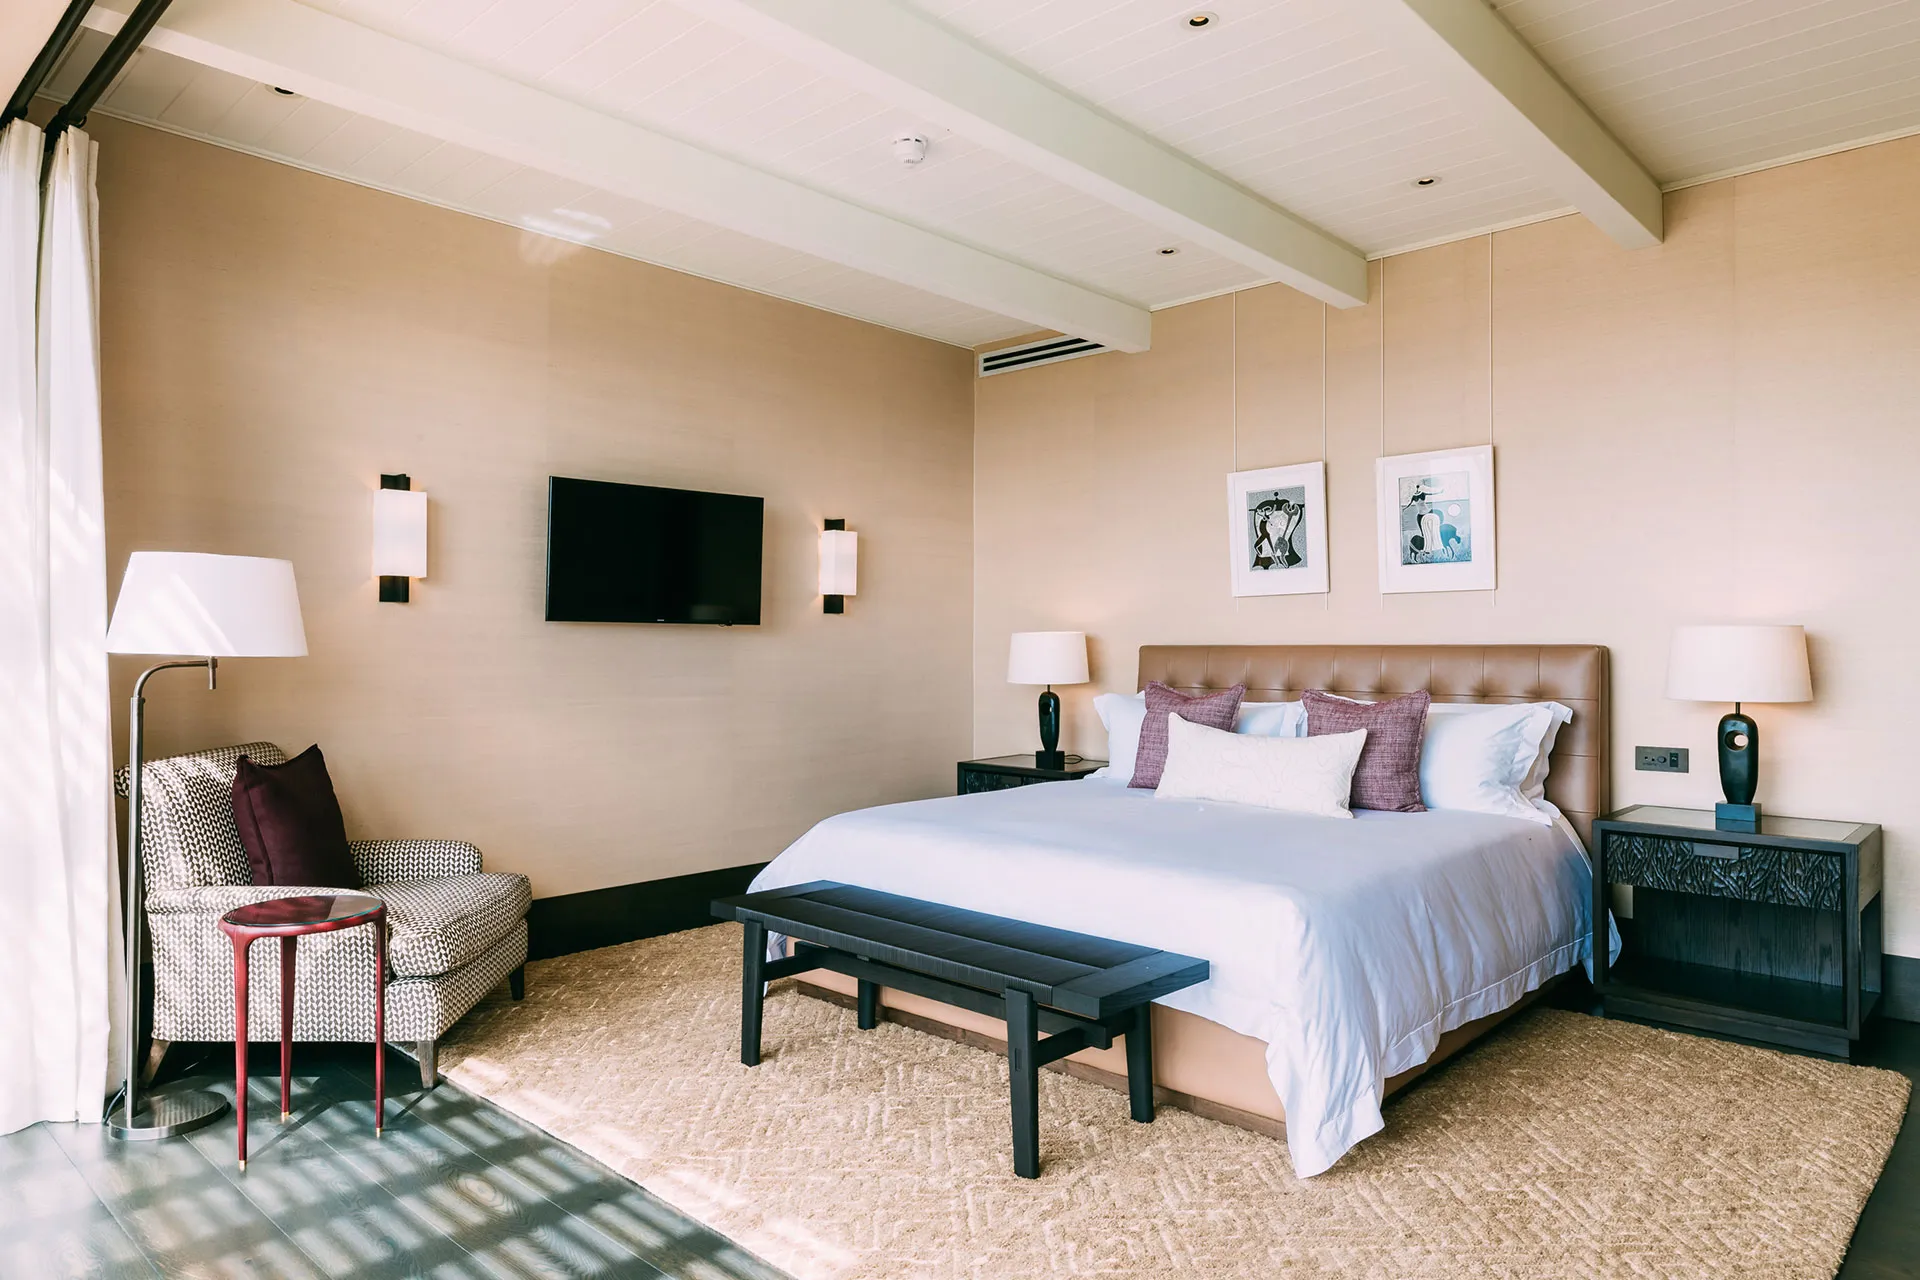 Doppelbett in Zimmer mit hautfarbener Wand